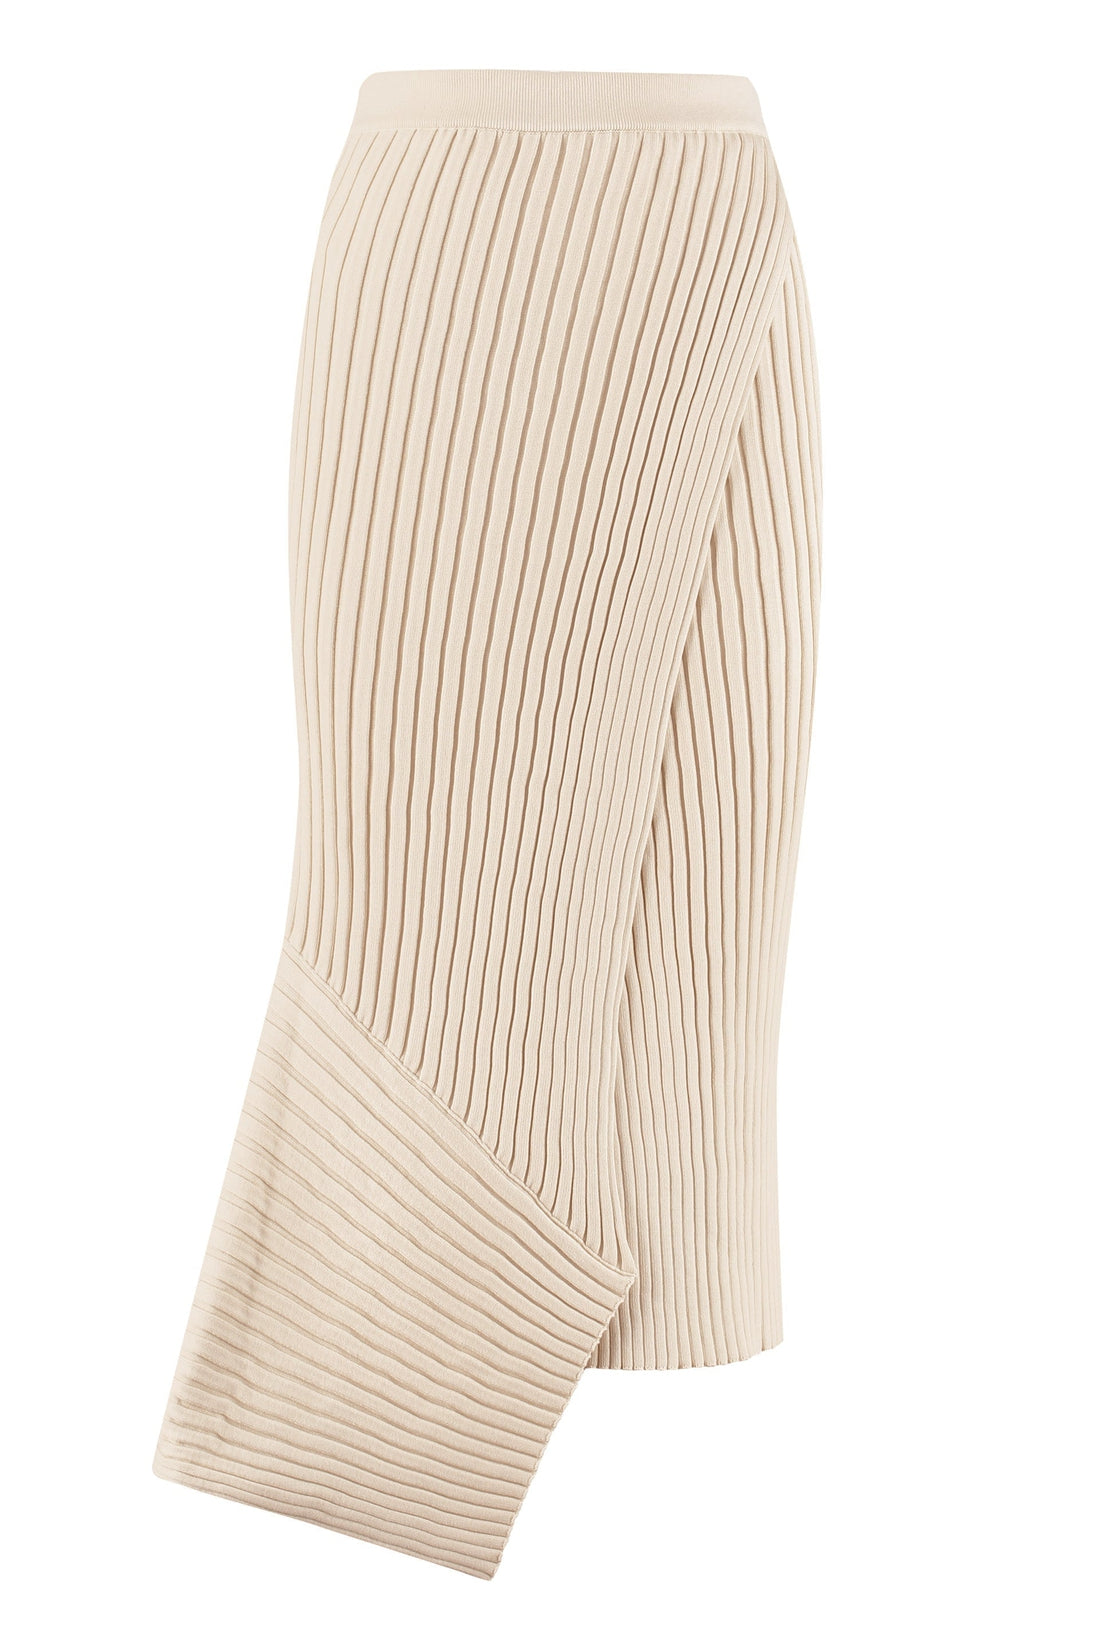 Stella McCartney-OUTLET-SALE-Ribbed knit skirt-ARCHIVIST